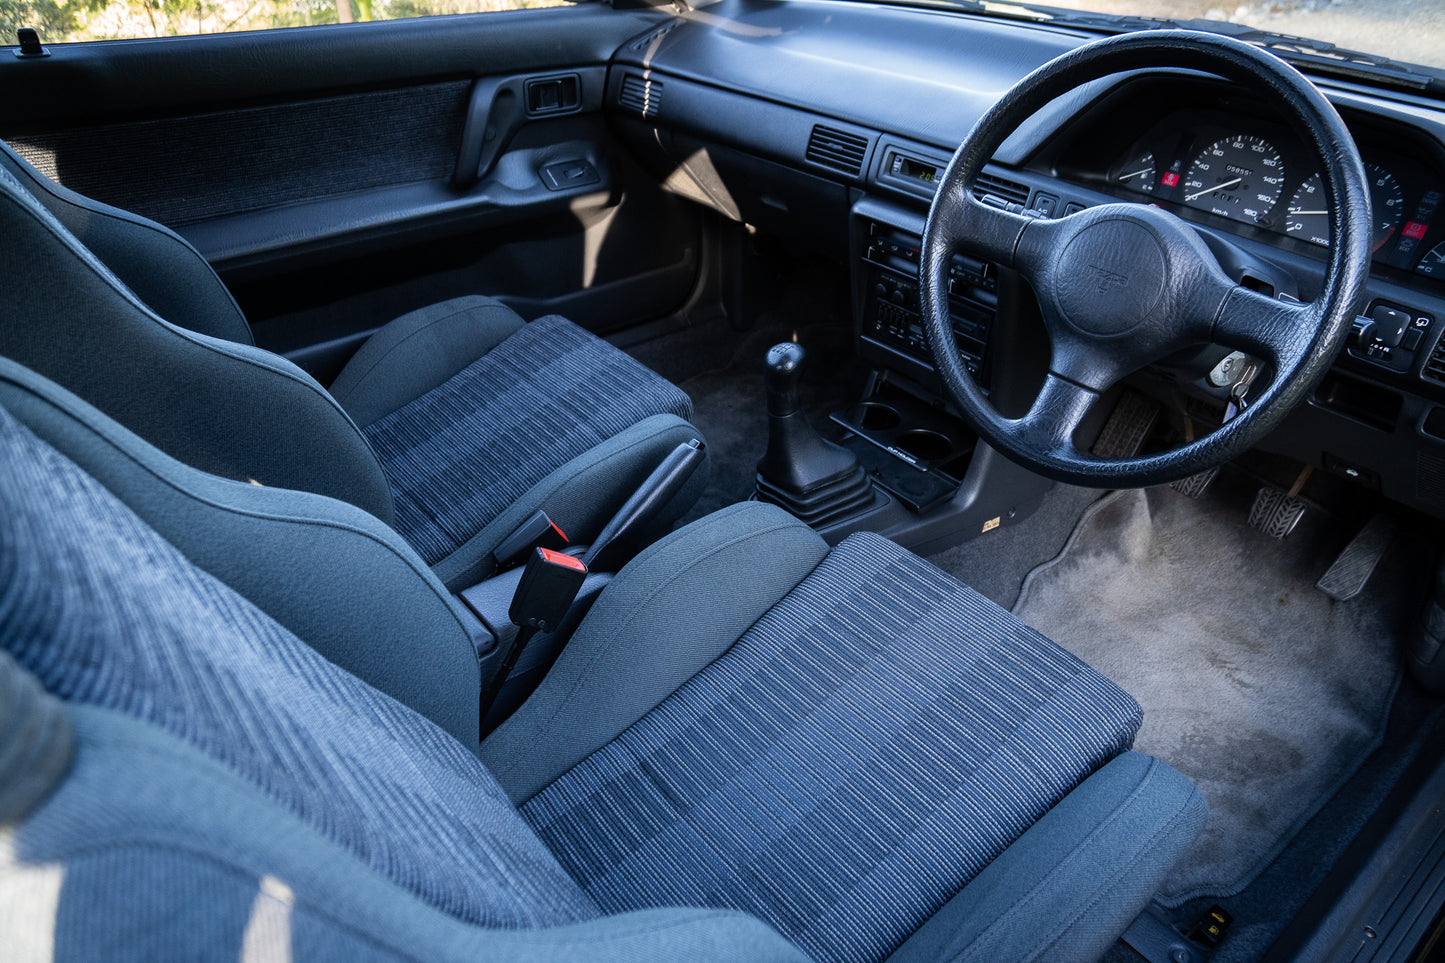 Mazda Familia GTX - 1990